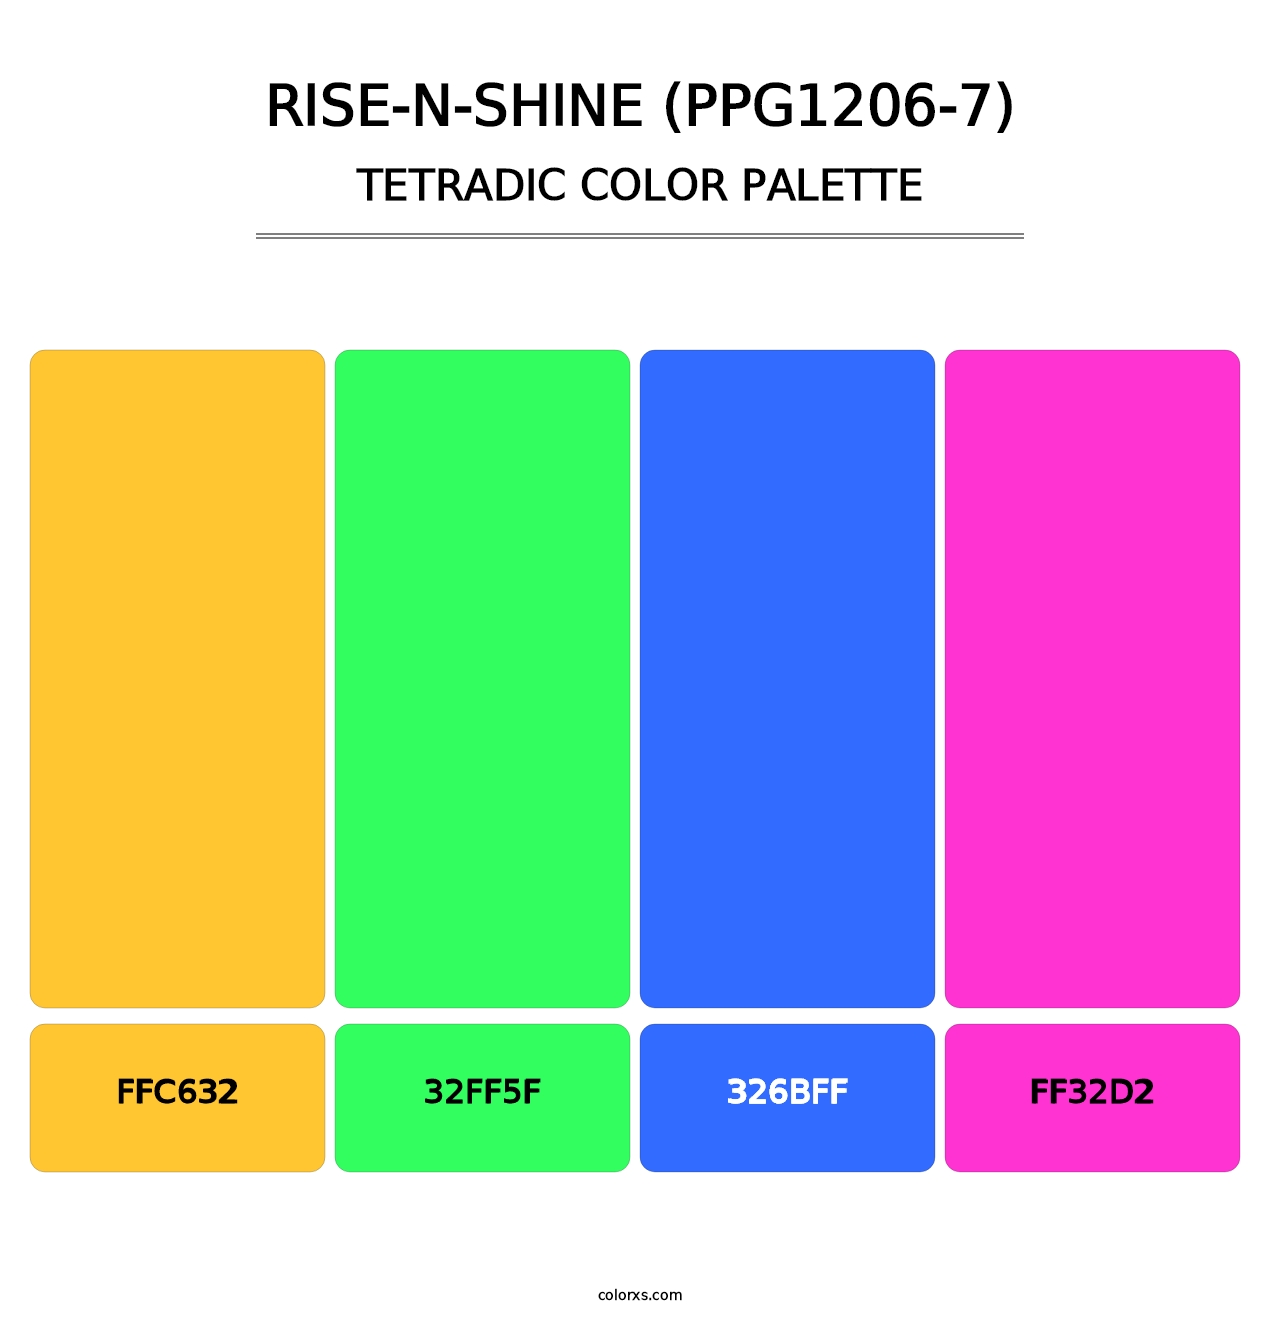 Rise-N-Shine (PPG1206-7) - Tetradic Color Palette